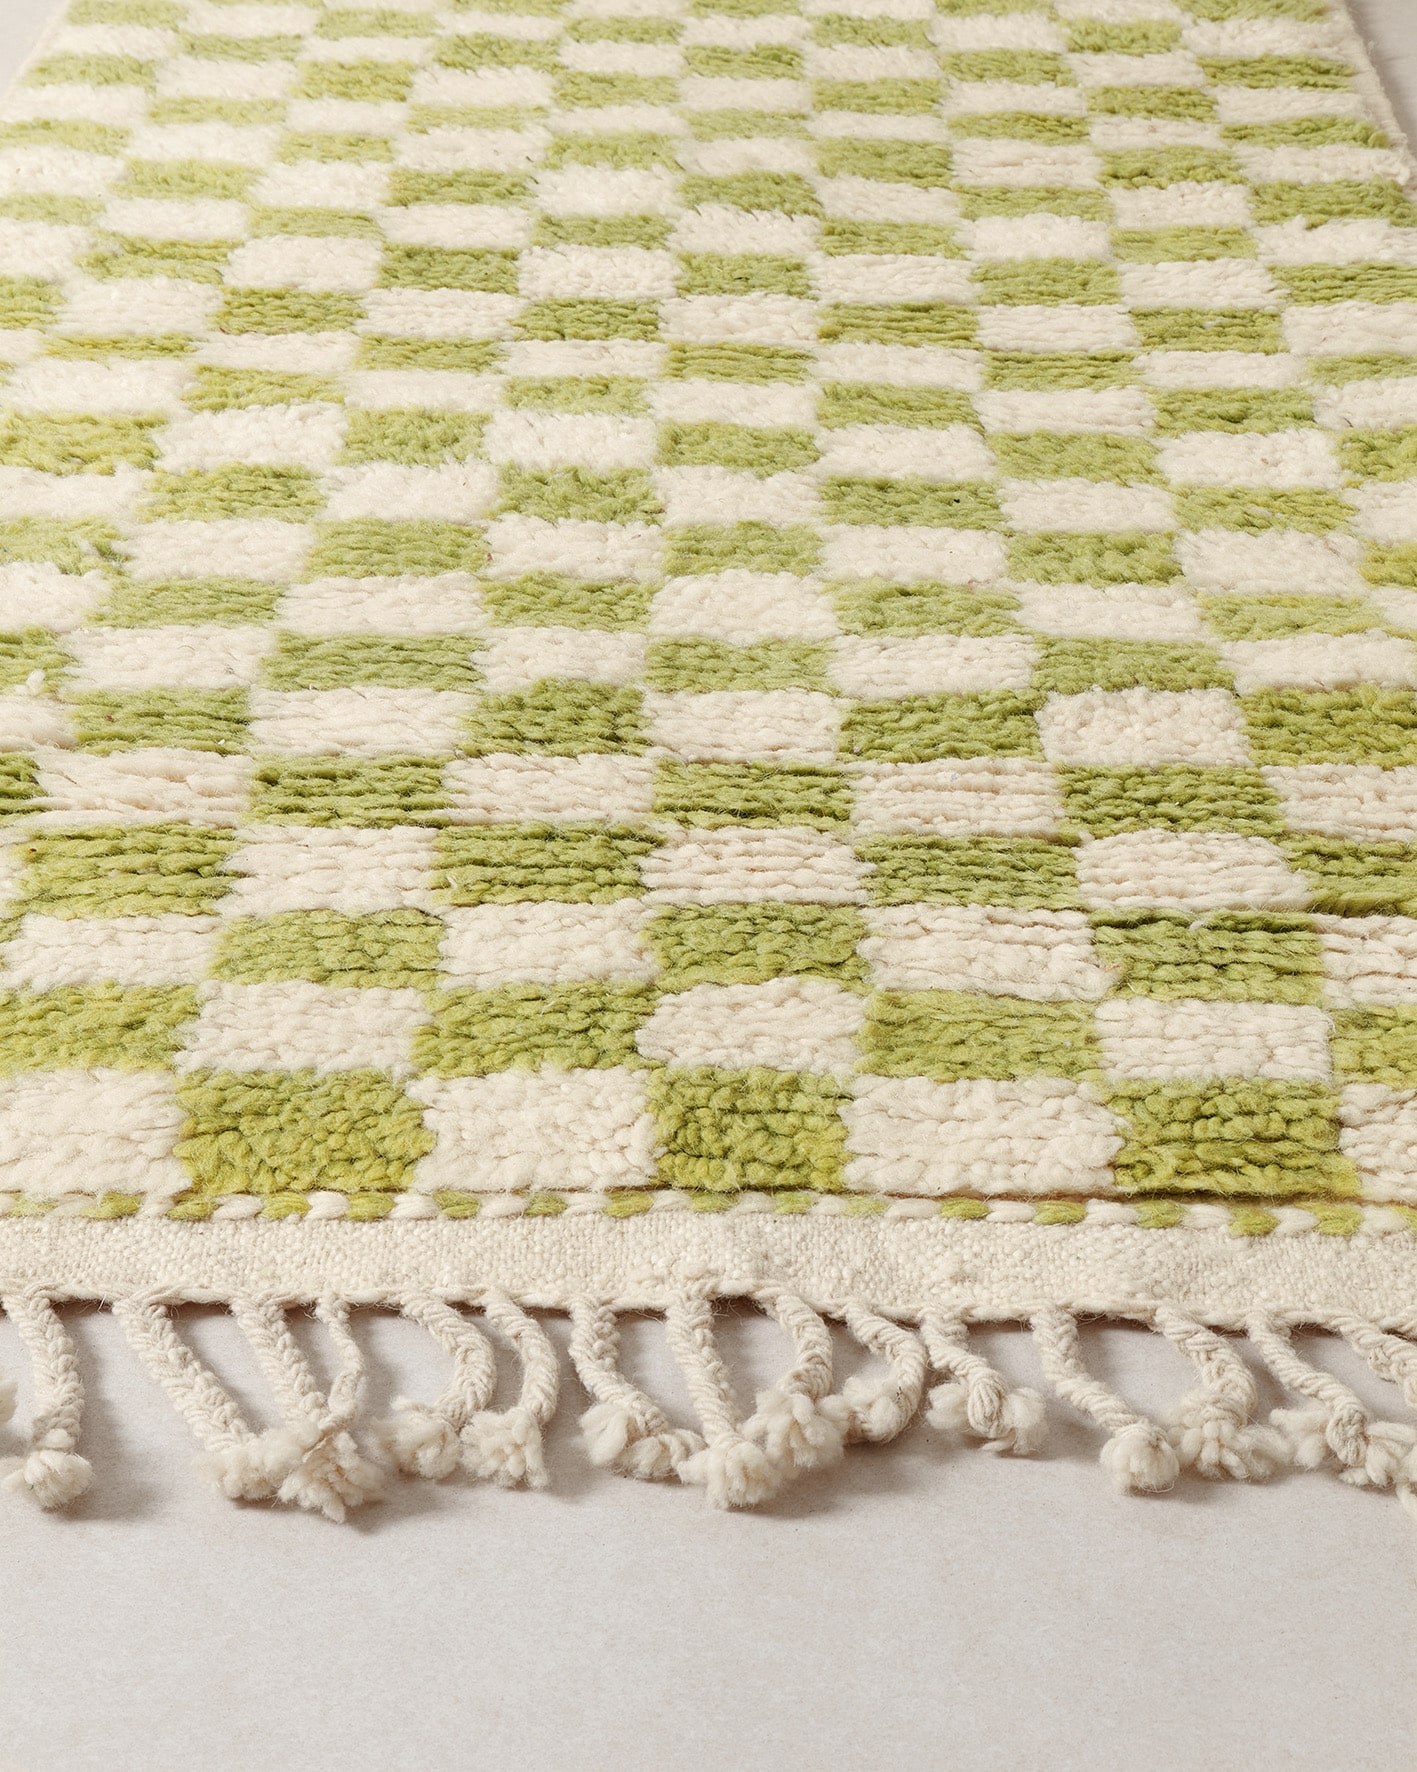 Green checkerboard rug, close